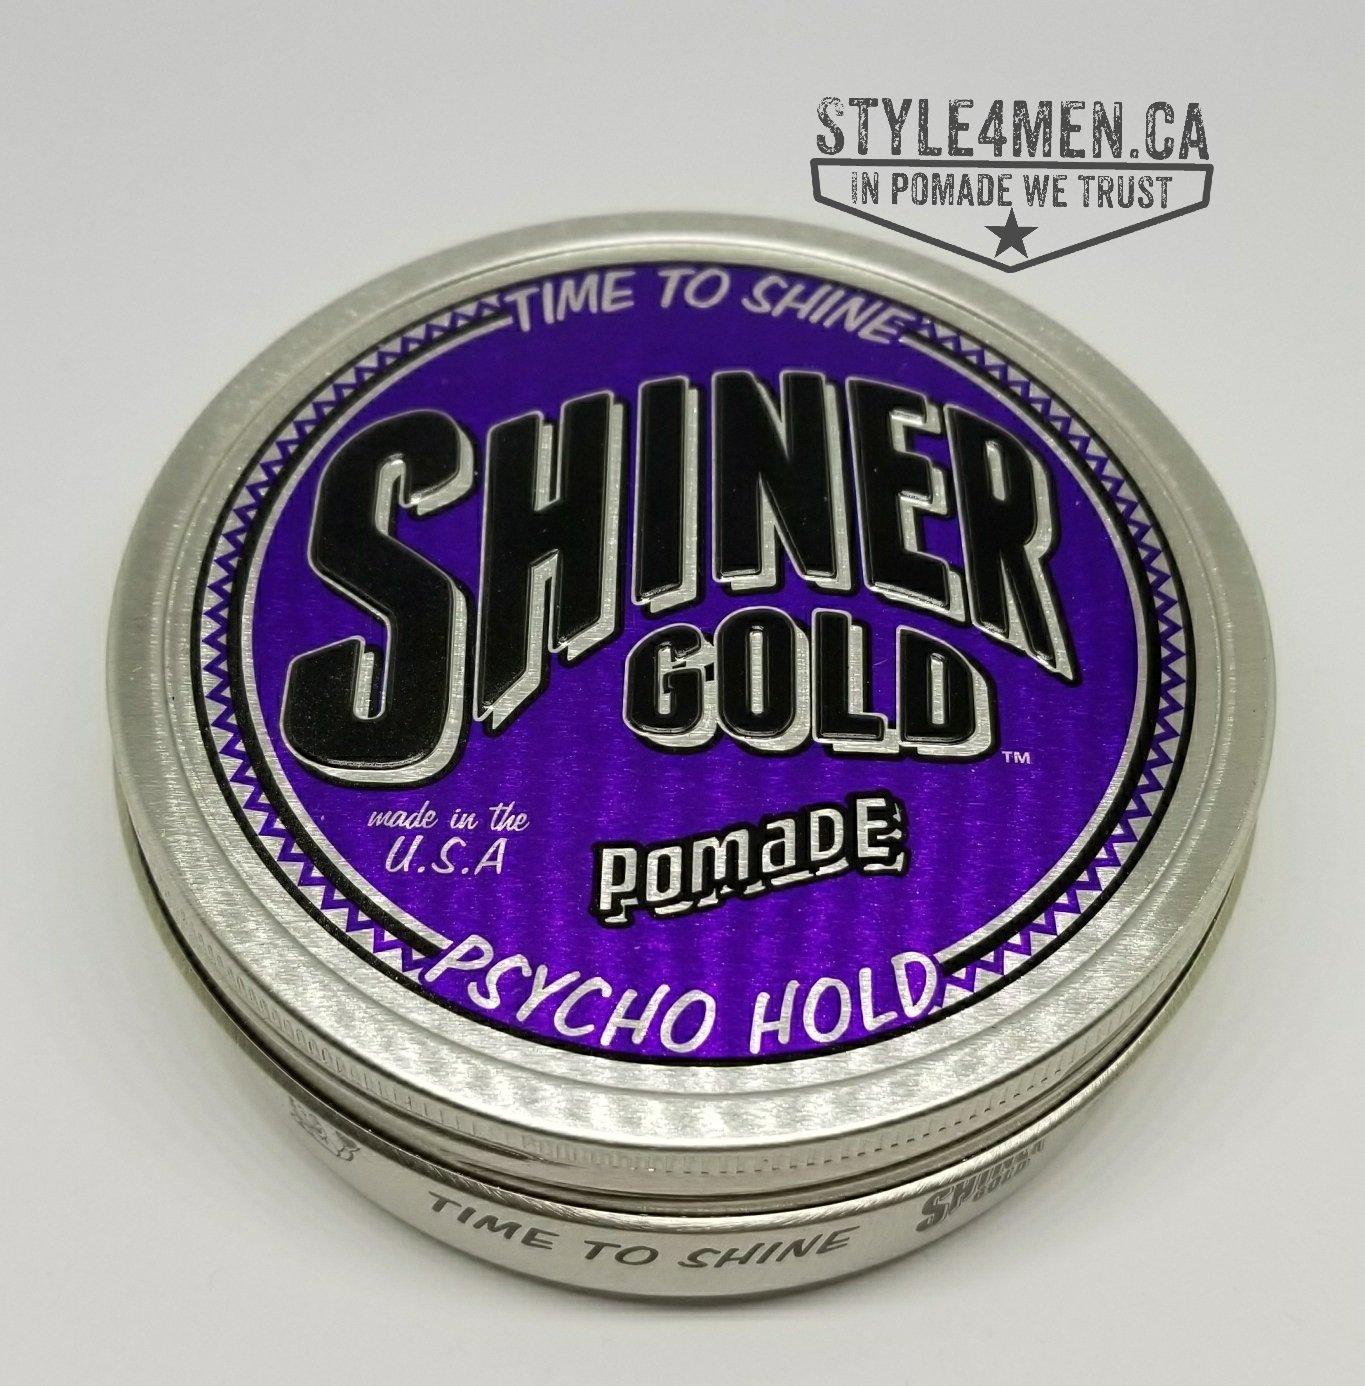 Shiner Gold Psycho Hold